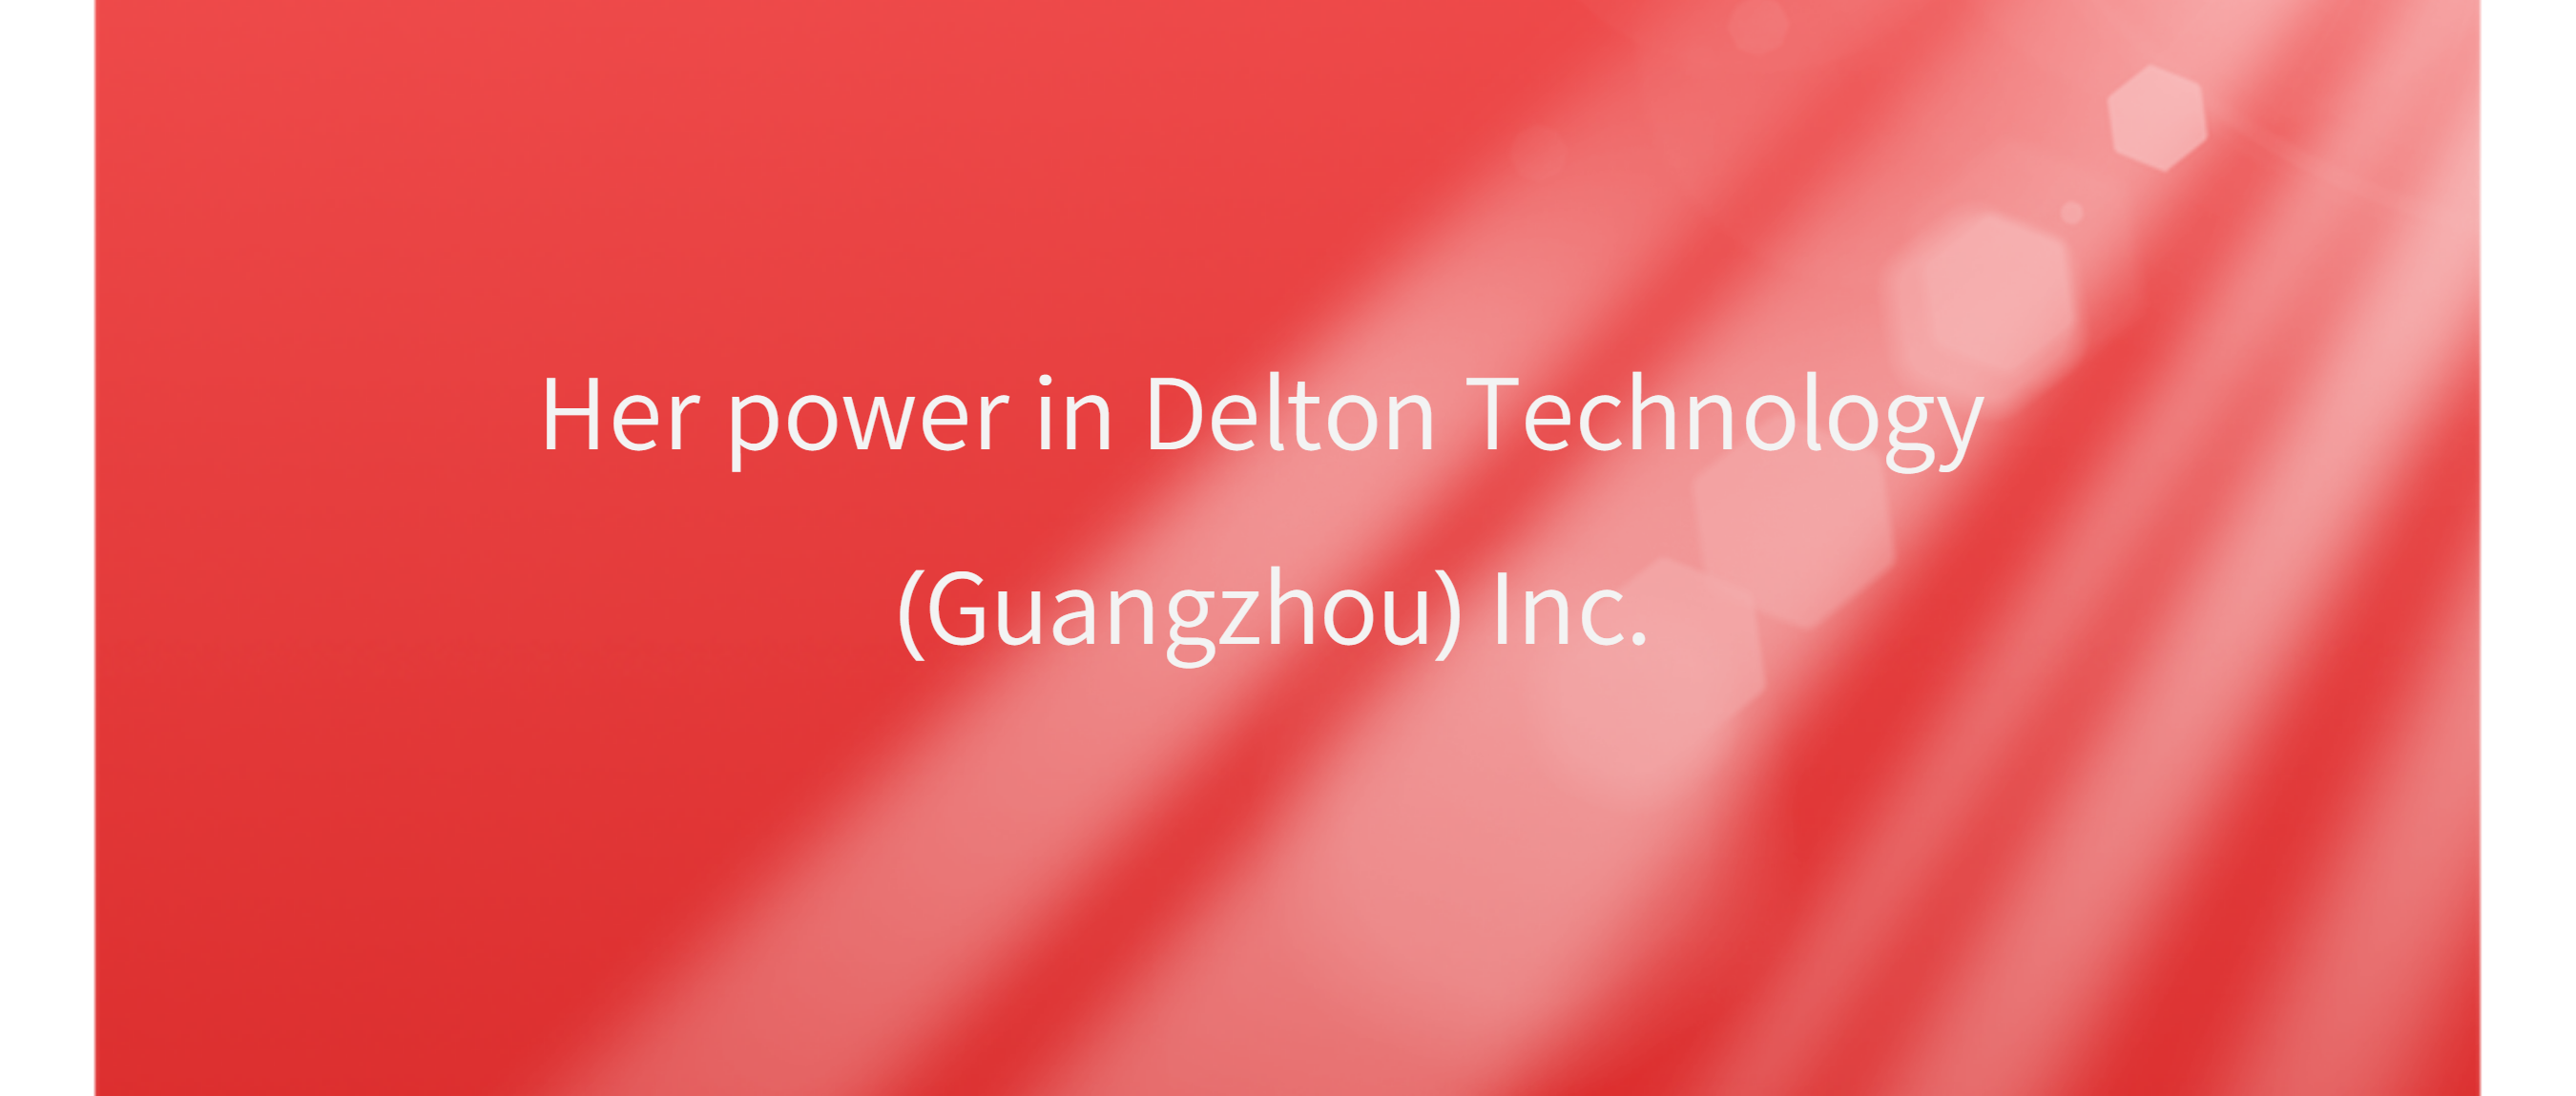 Her power in Delton Technology (Guangzhou) Inc.